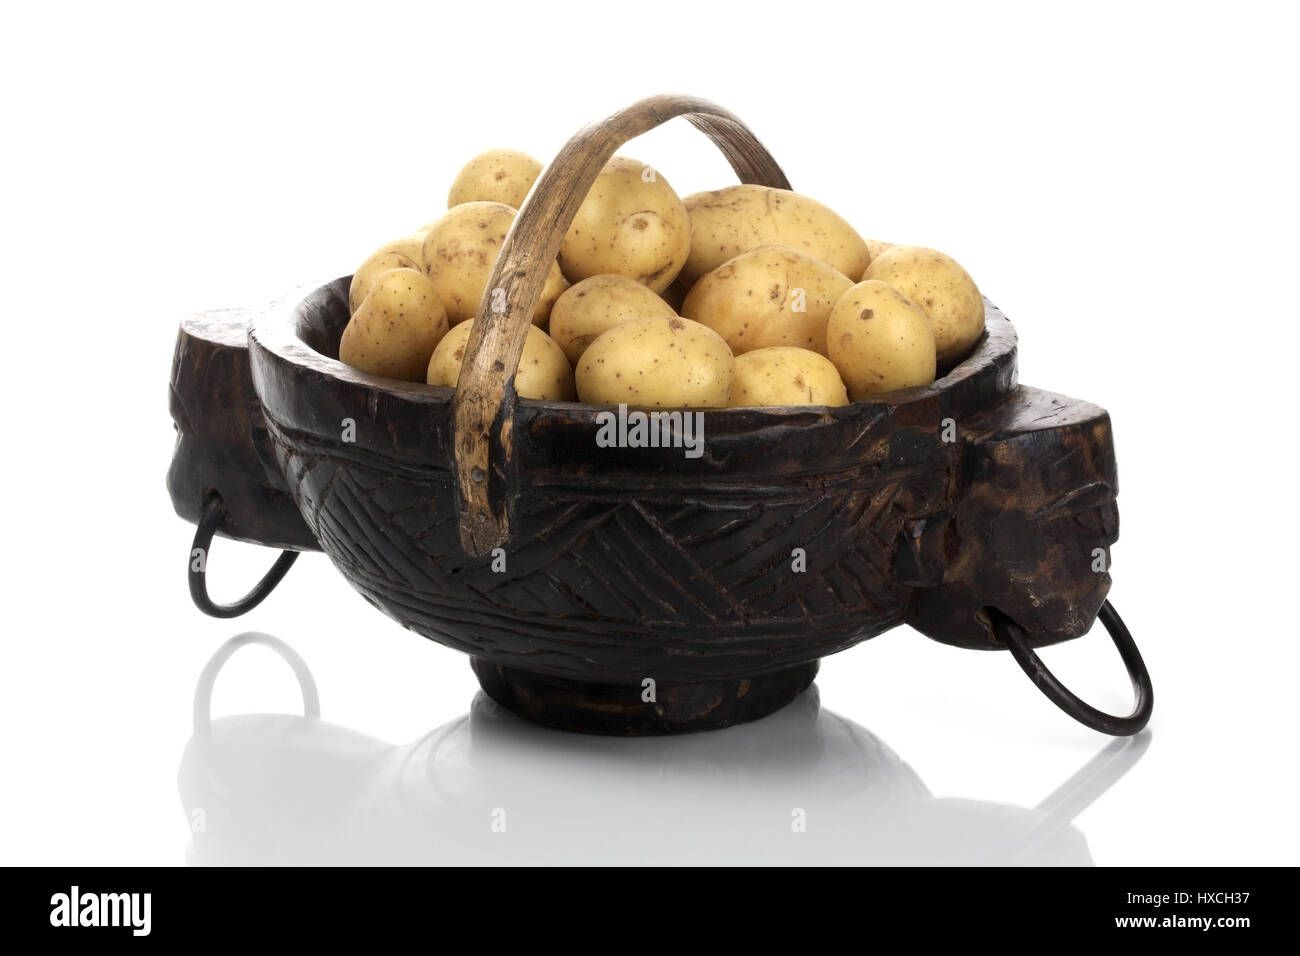 Bowl with potatoes, Schale mit Kartoffeln Stock Photo